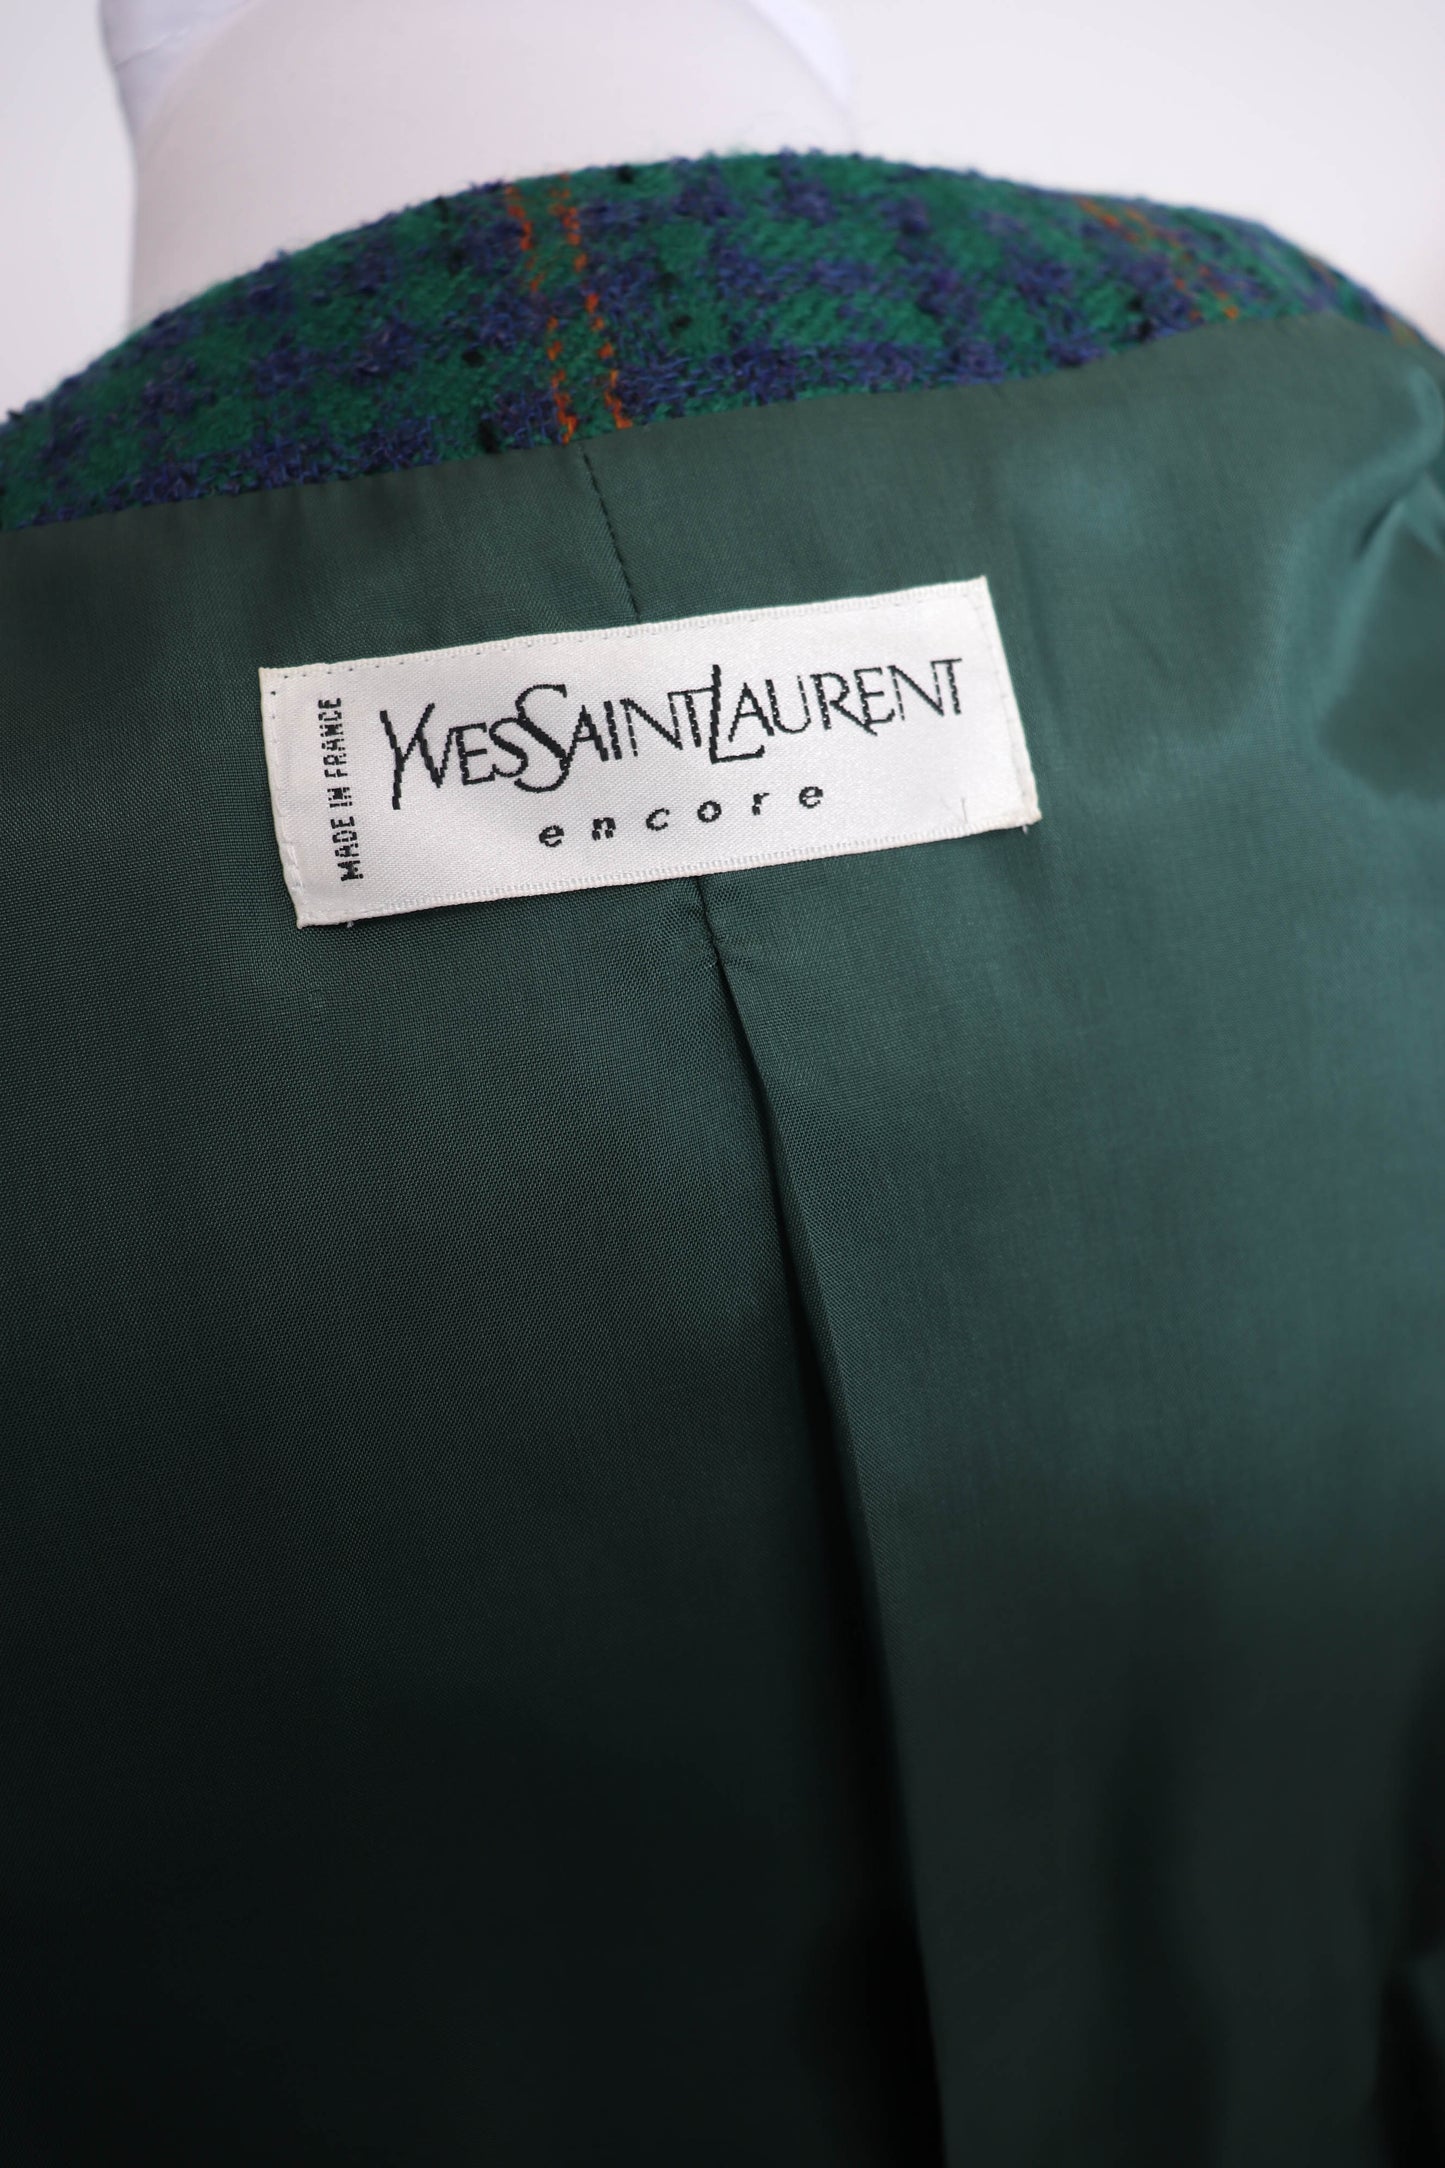 90's YSL Plaid Wool Skirt Suit L/XL